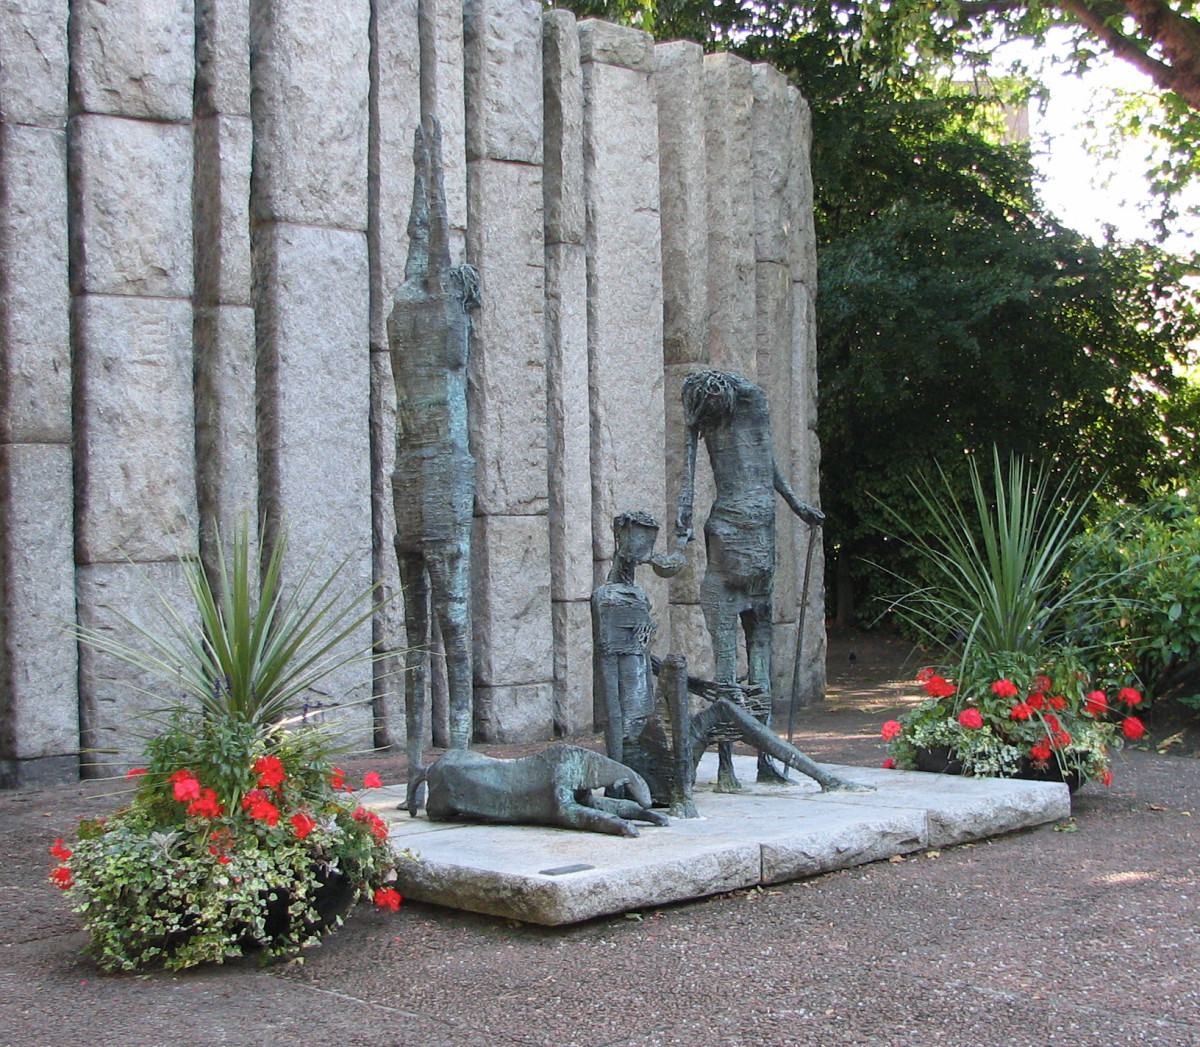 Edward Delaney's famine statue at the corner of St Stephen's Green in Dublin.